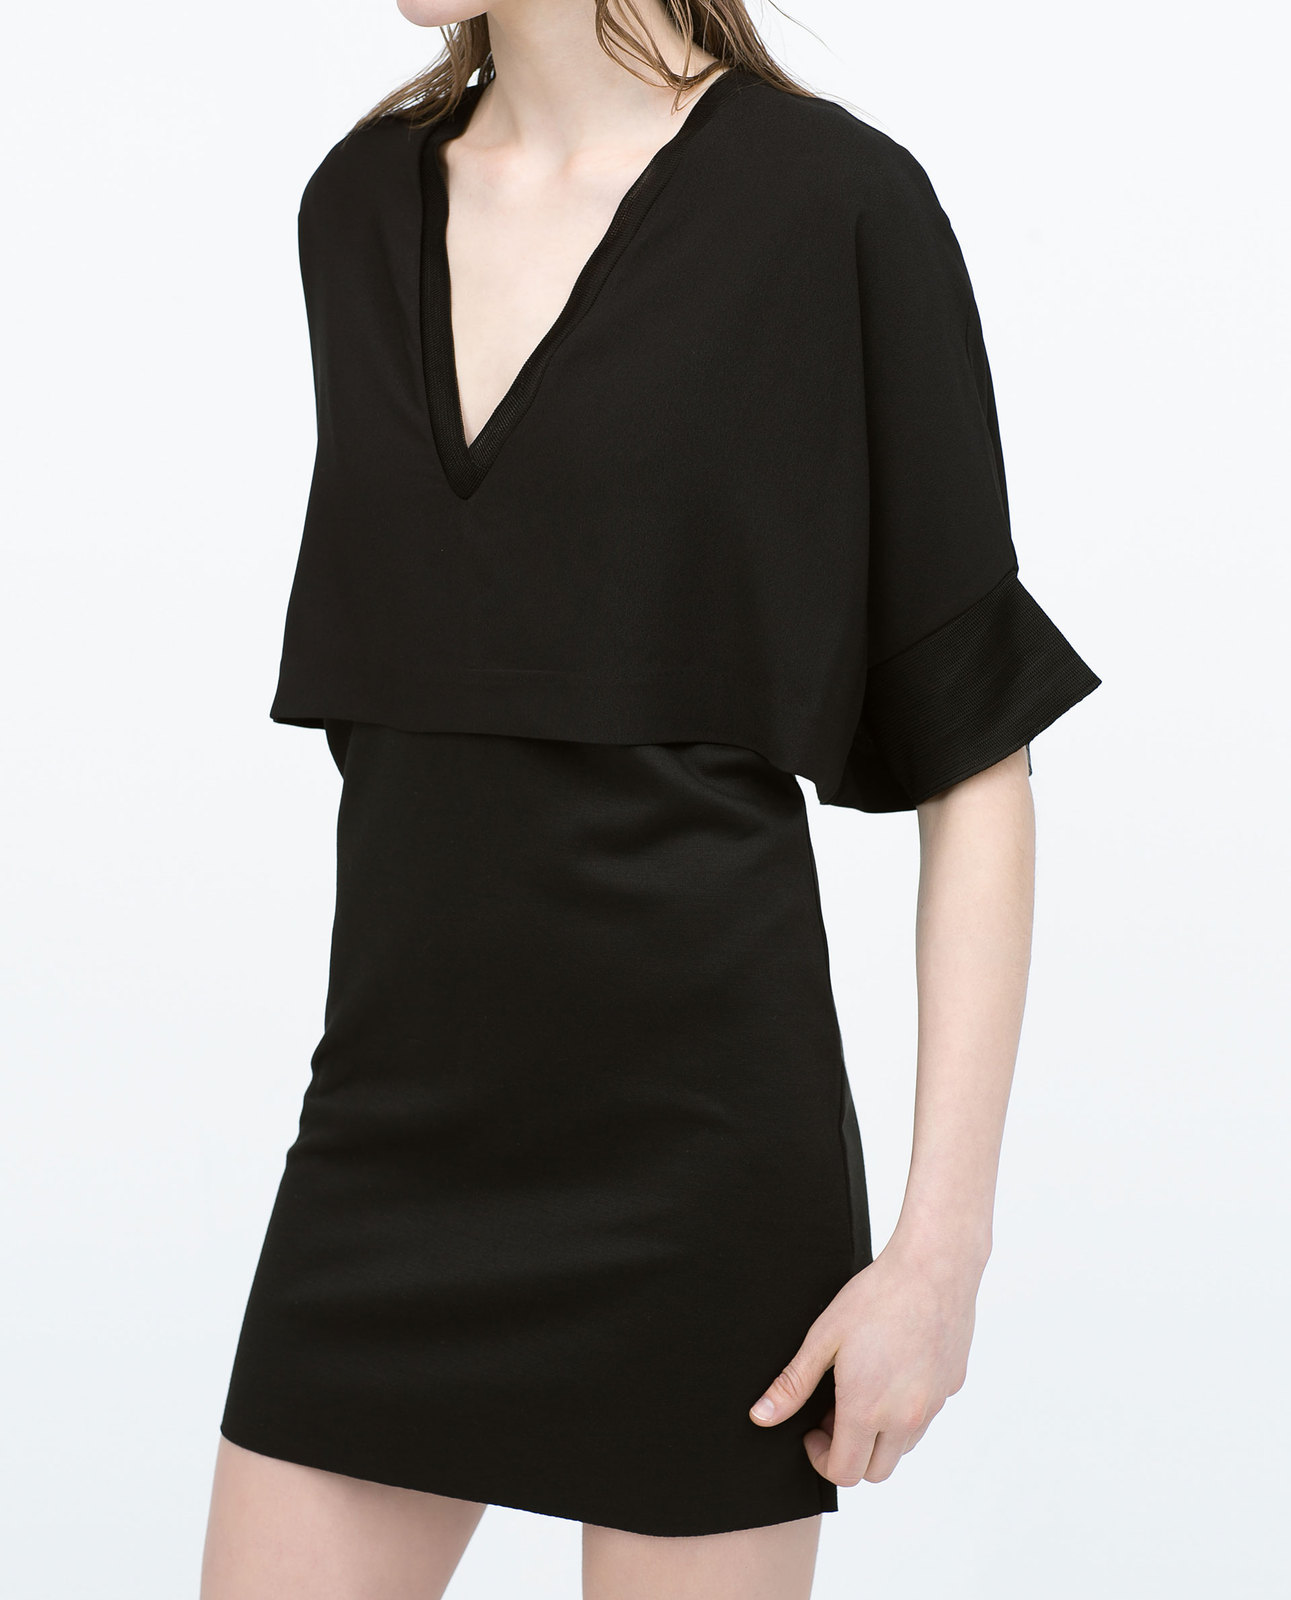 Zara fekete duplarétegű fekete ruha 2015 fotója